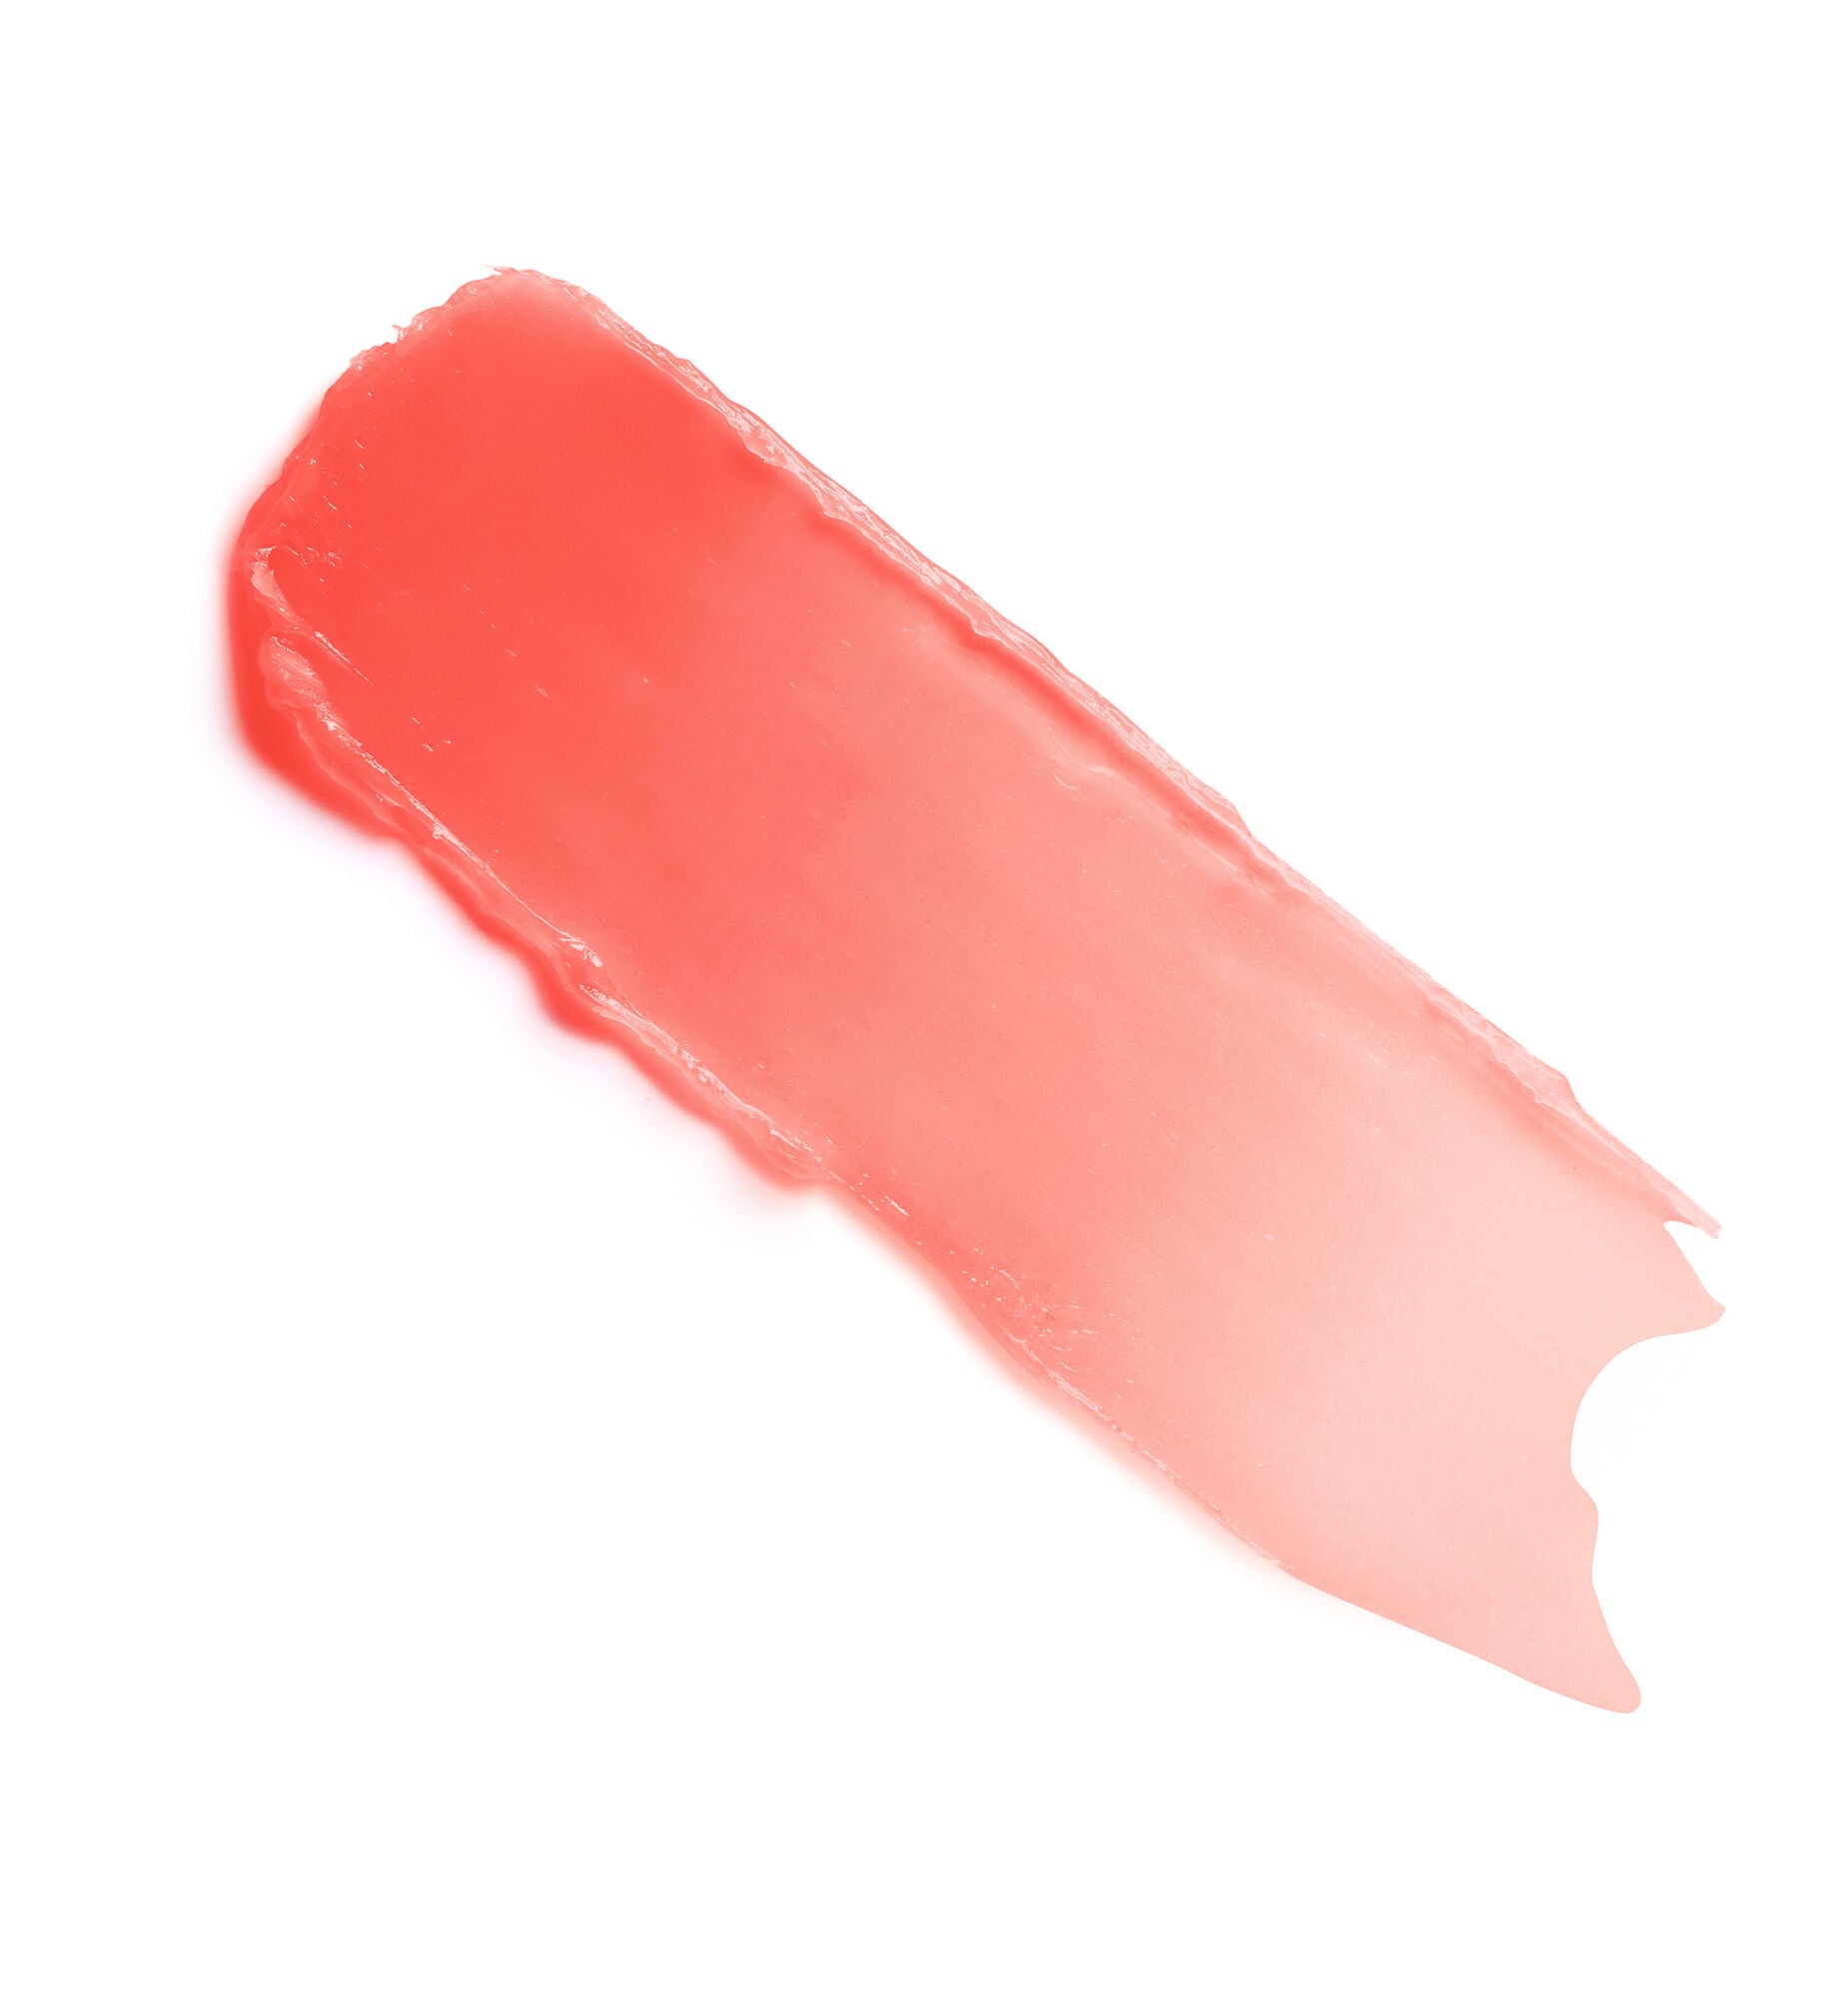 Son Dưỡng Dior Addict Lip Glow - 061 Poppy Coral